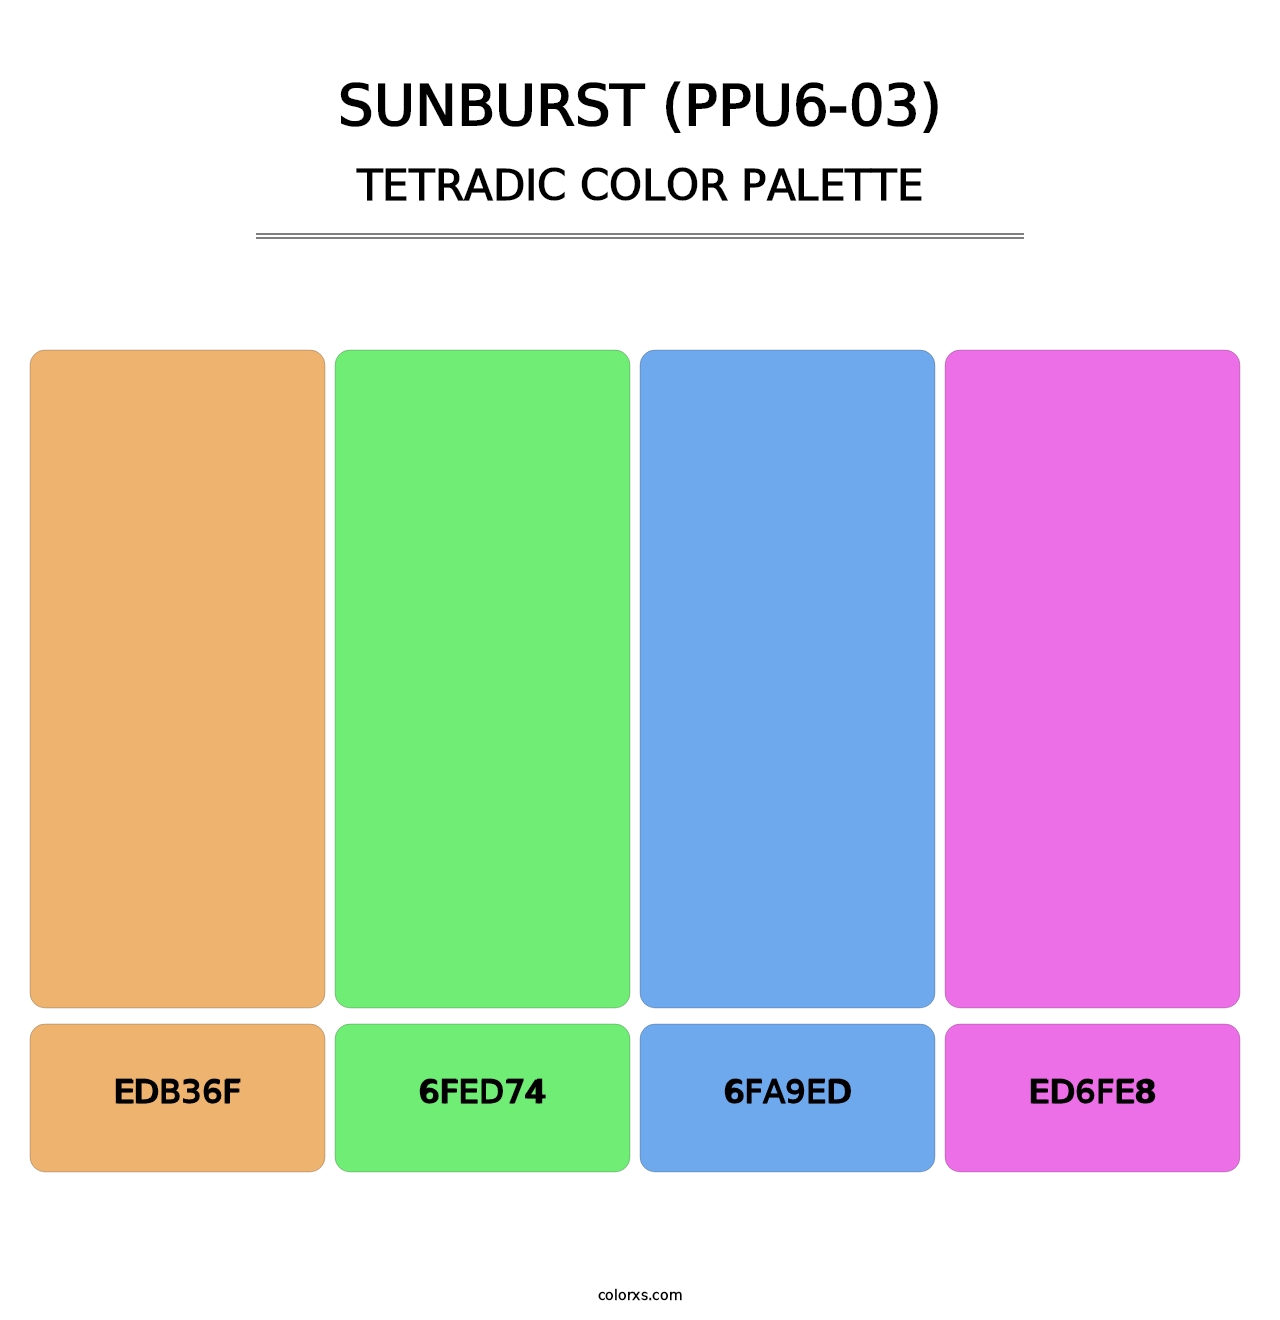 Sunburst (PPU6-03) - Tetradic Color Palette